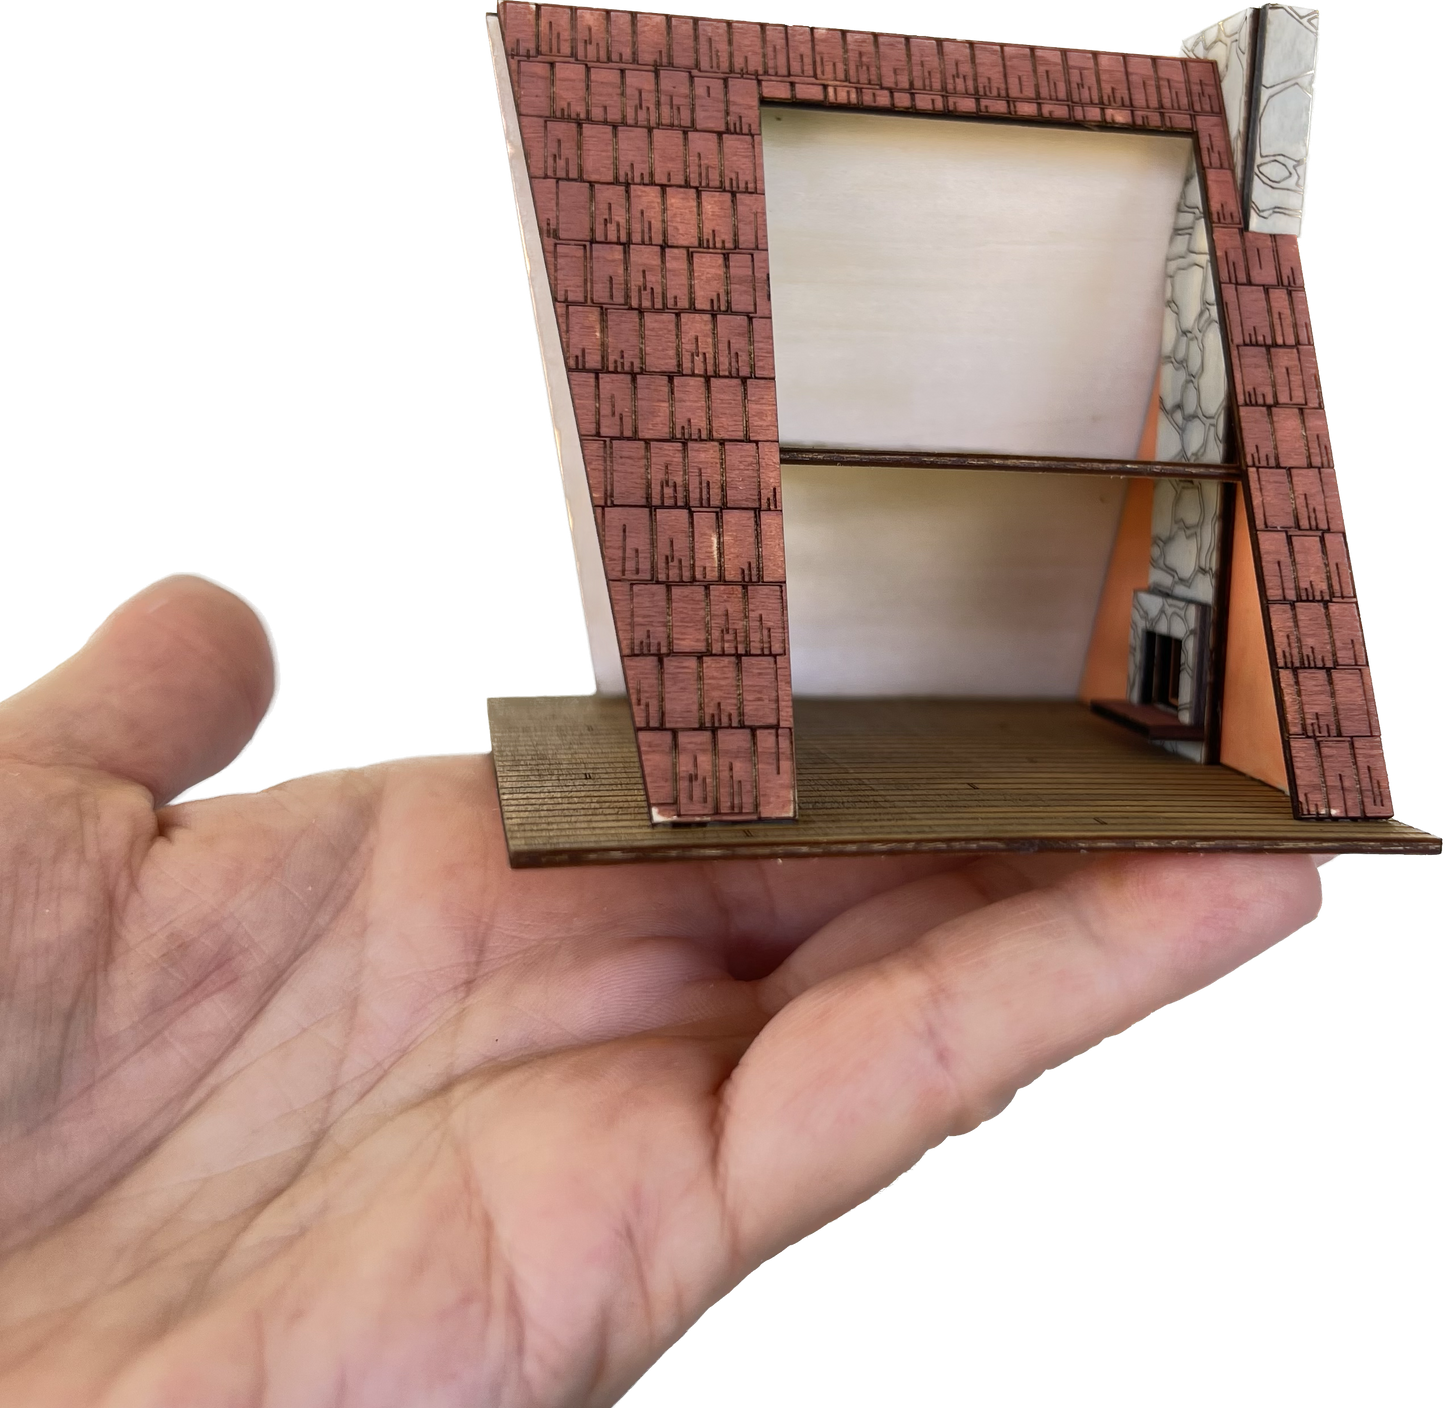 The Juniper, A-Frame Mid Century Modern Miniature Dollhouse 1:144